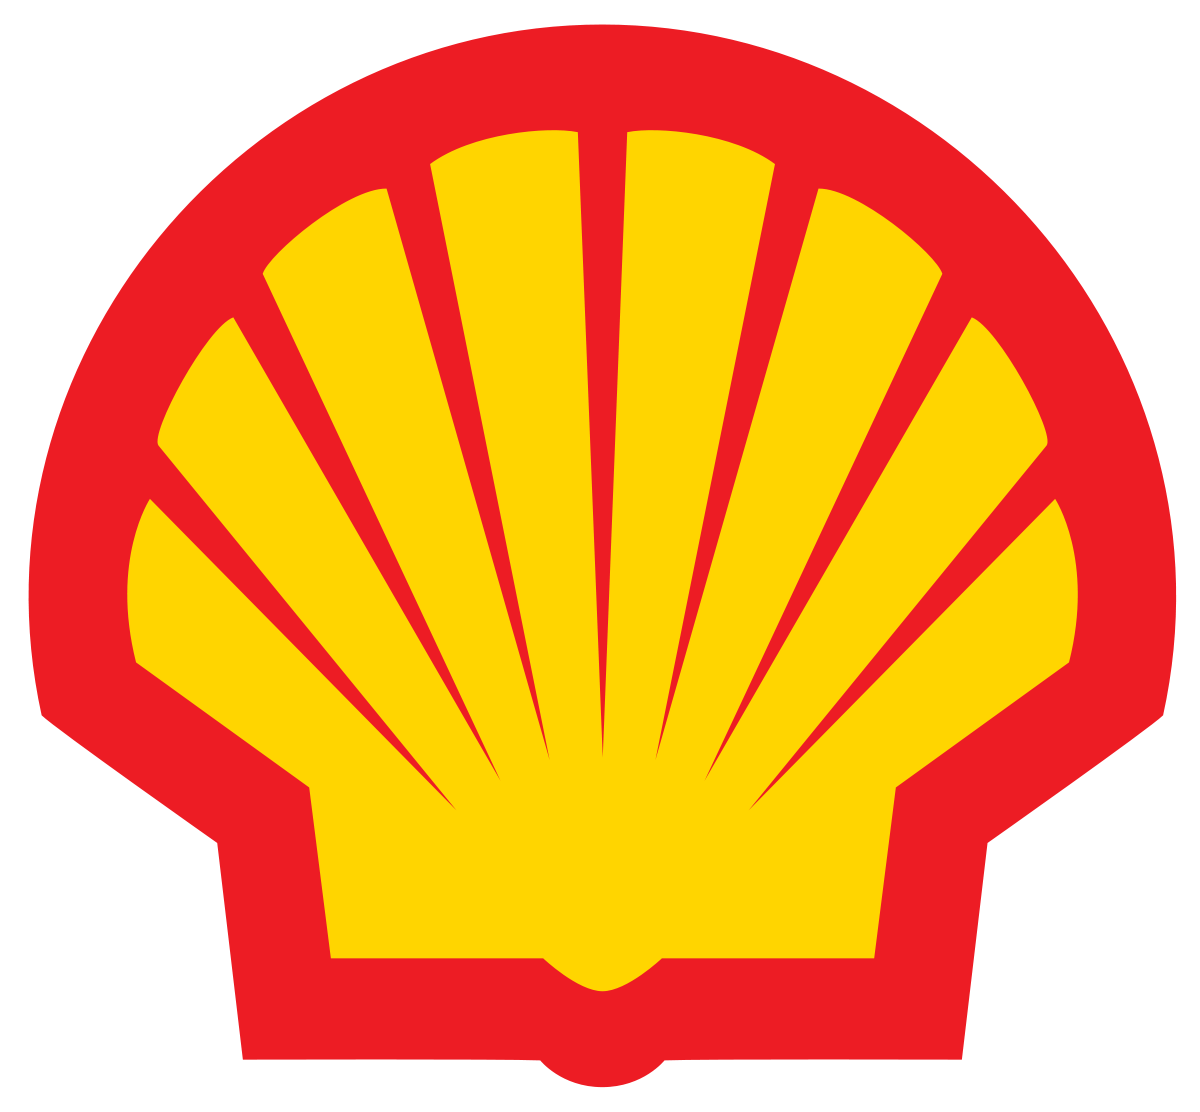 Shell Gas Logo - Shell Oil Company